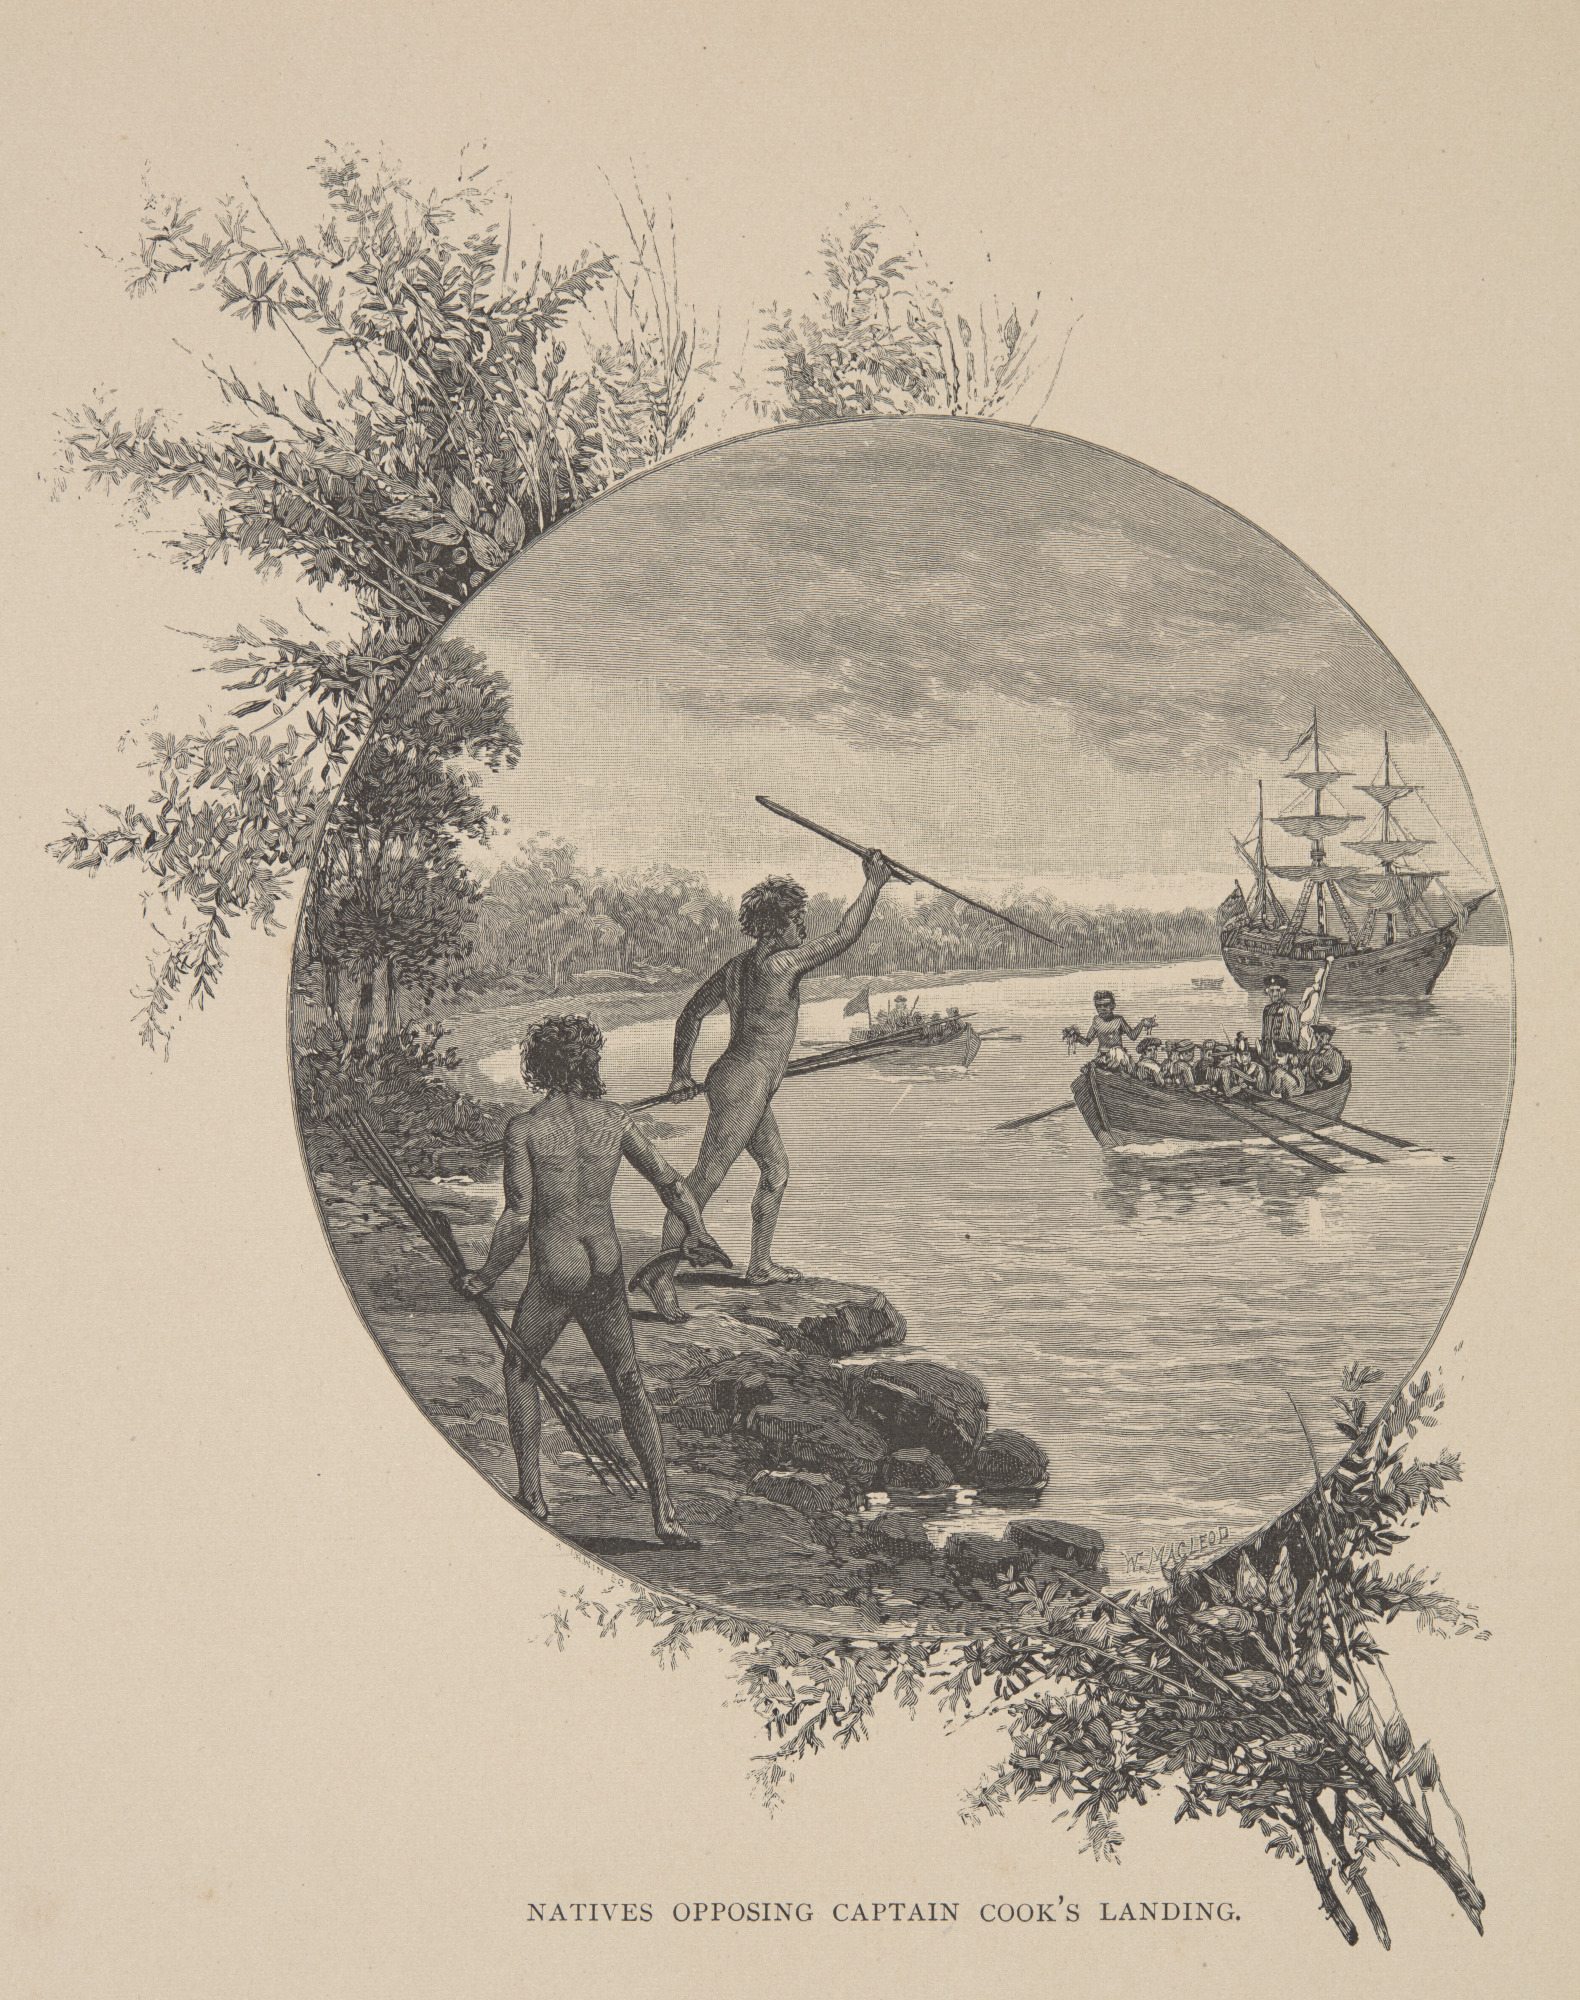 <p>‘Natives Opposing Captain Cook’s Landing’, in <em>Picturesque Atlas of Australasia,</em> 1886</p>
